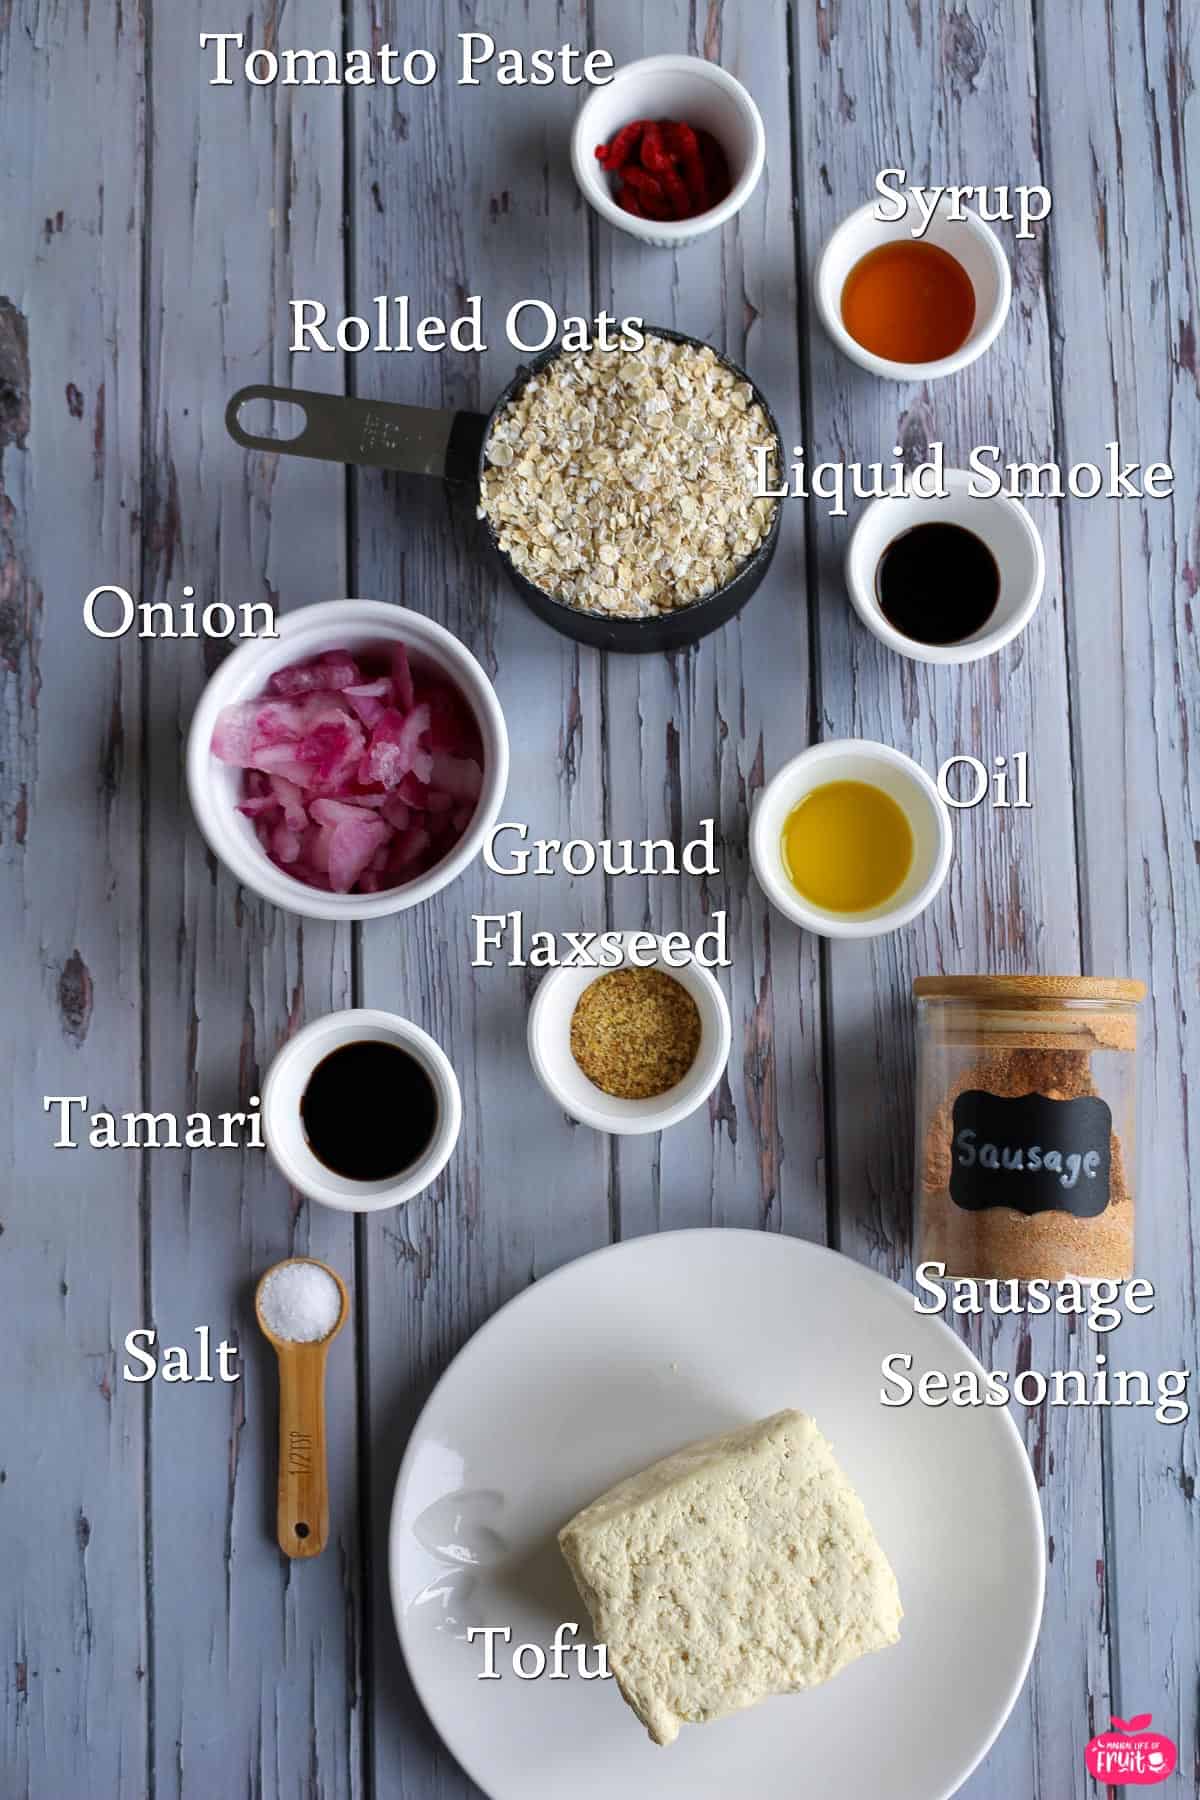 Tofu Sausage Ingredients, tomato paste, syrup, liquid smoke, oil, sausage seasoning, tofu, salt, tamari, ground flaxseed, onion, rolled oats.